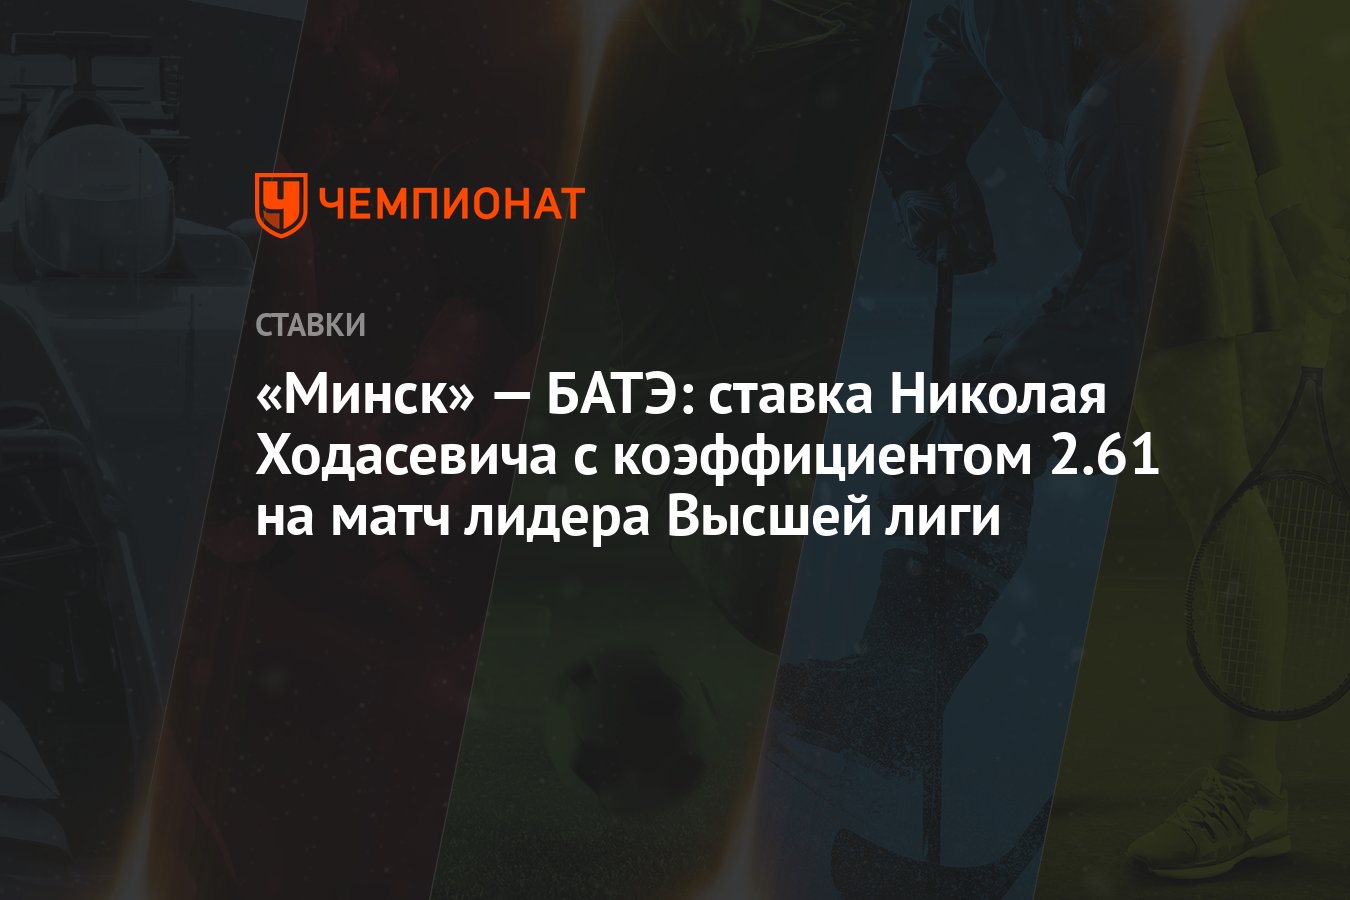 “minsk”-–-bate-borisov:-nikolai-khodasevich'in-major-league-lideri-macinda-2,61-katsayili-bahsi